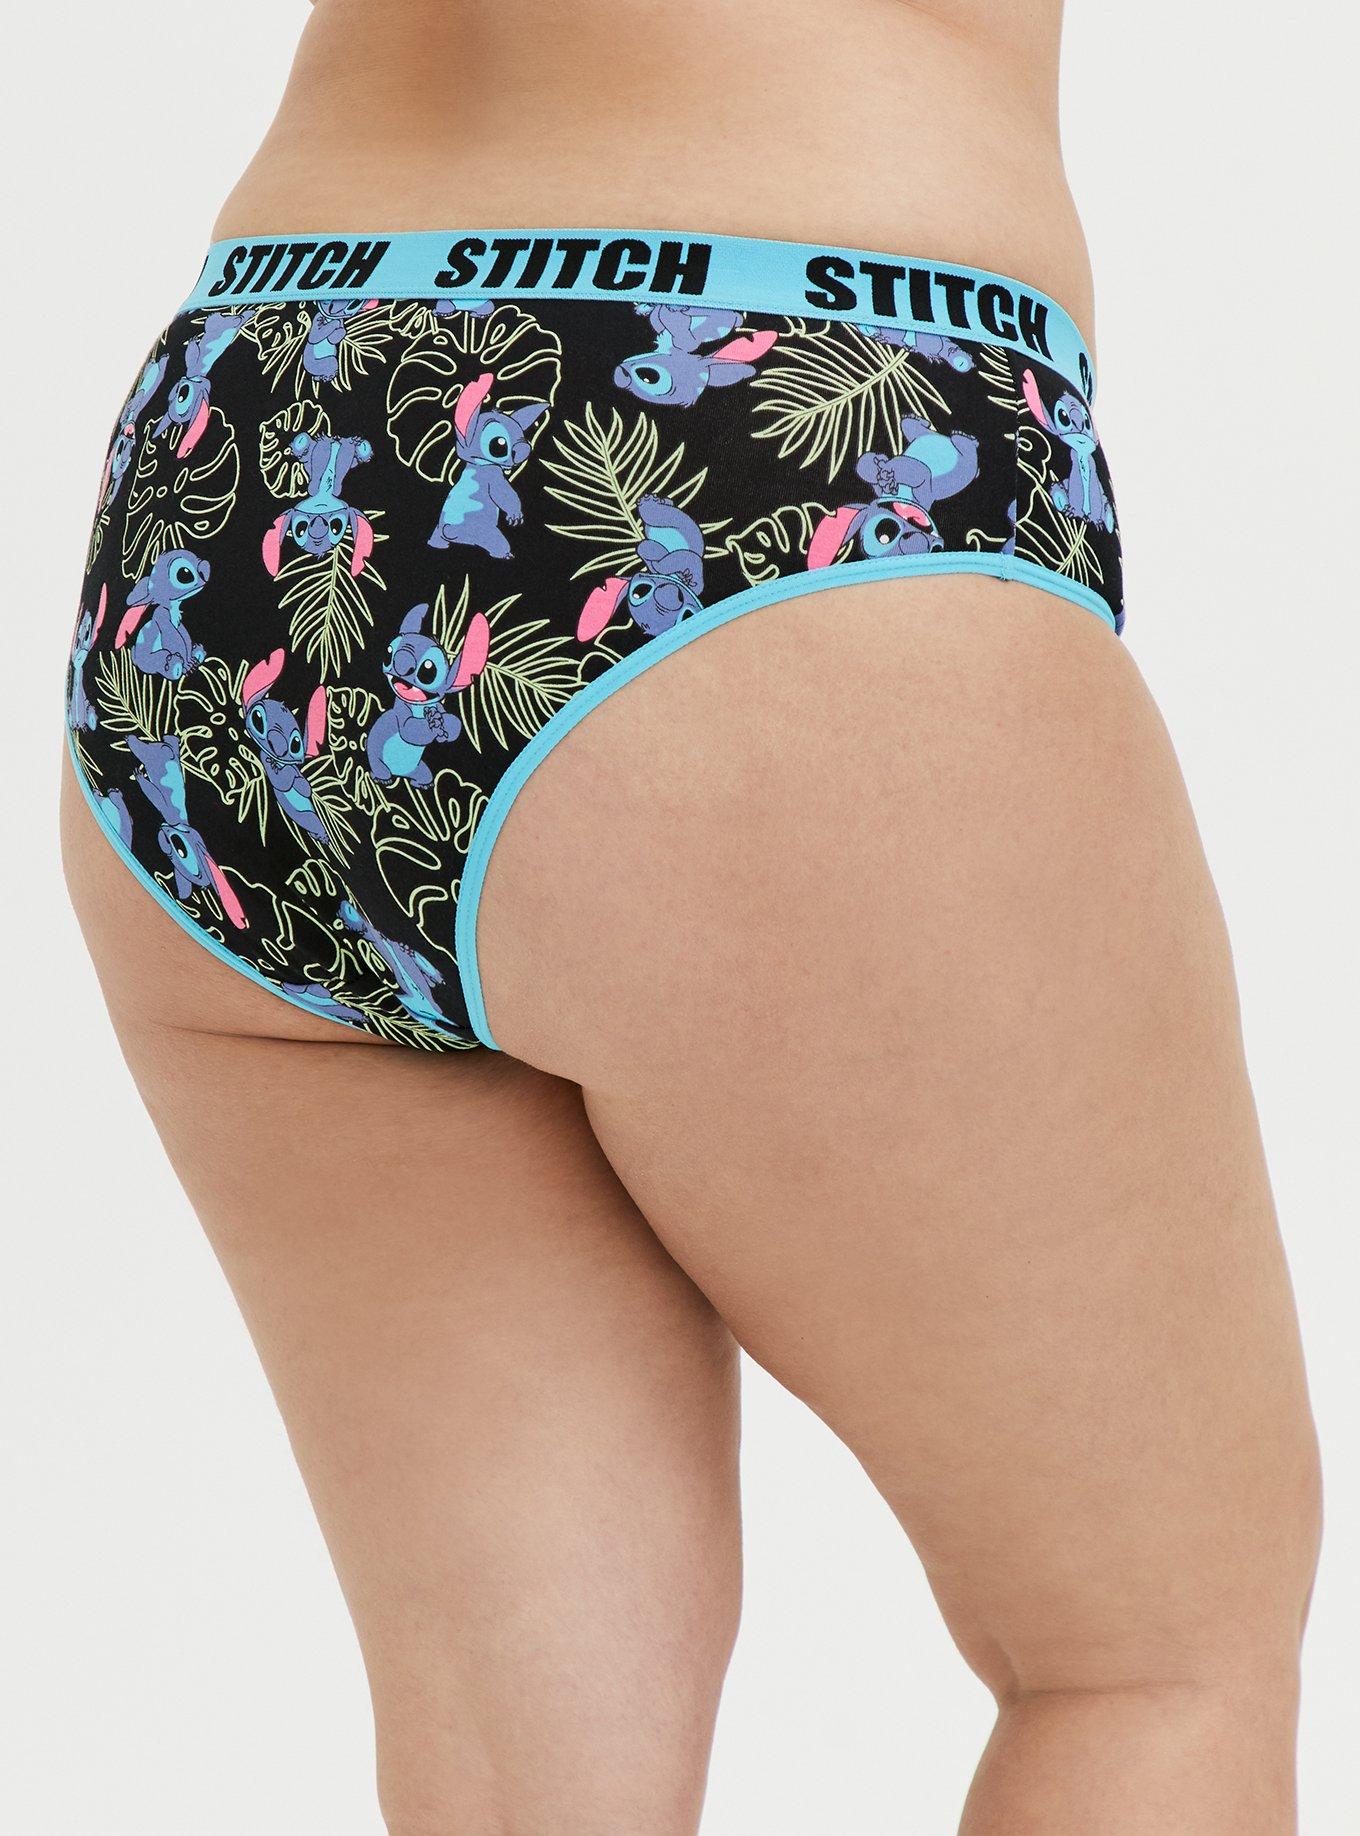 Plus Size - Disney Lilo & Stitch Black Cotton Hipster Panty - Torrid